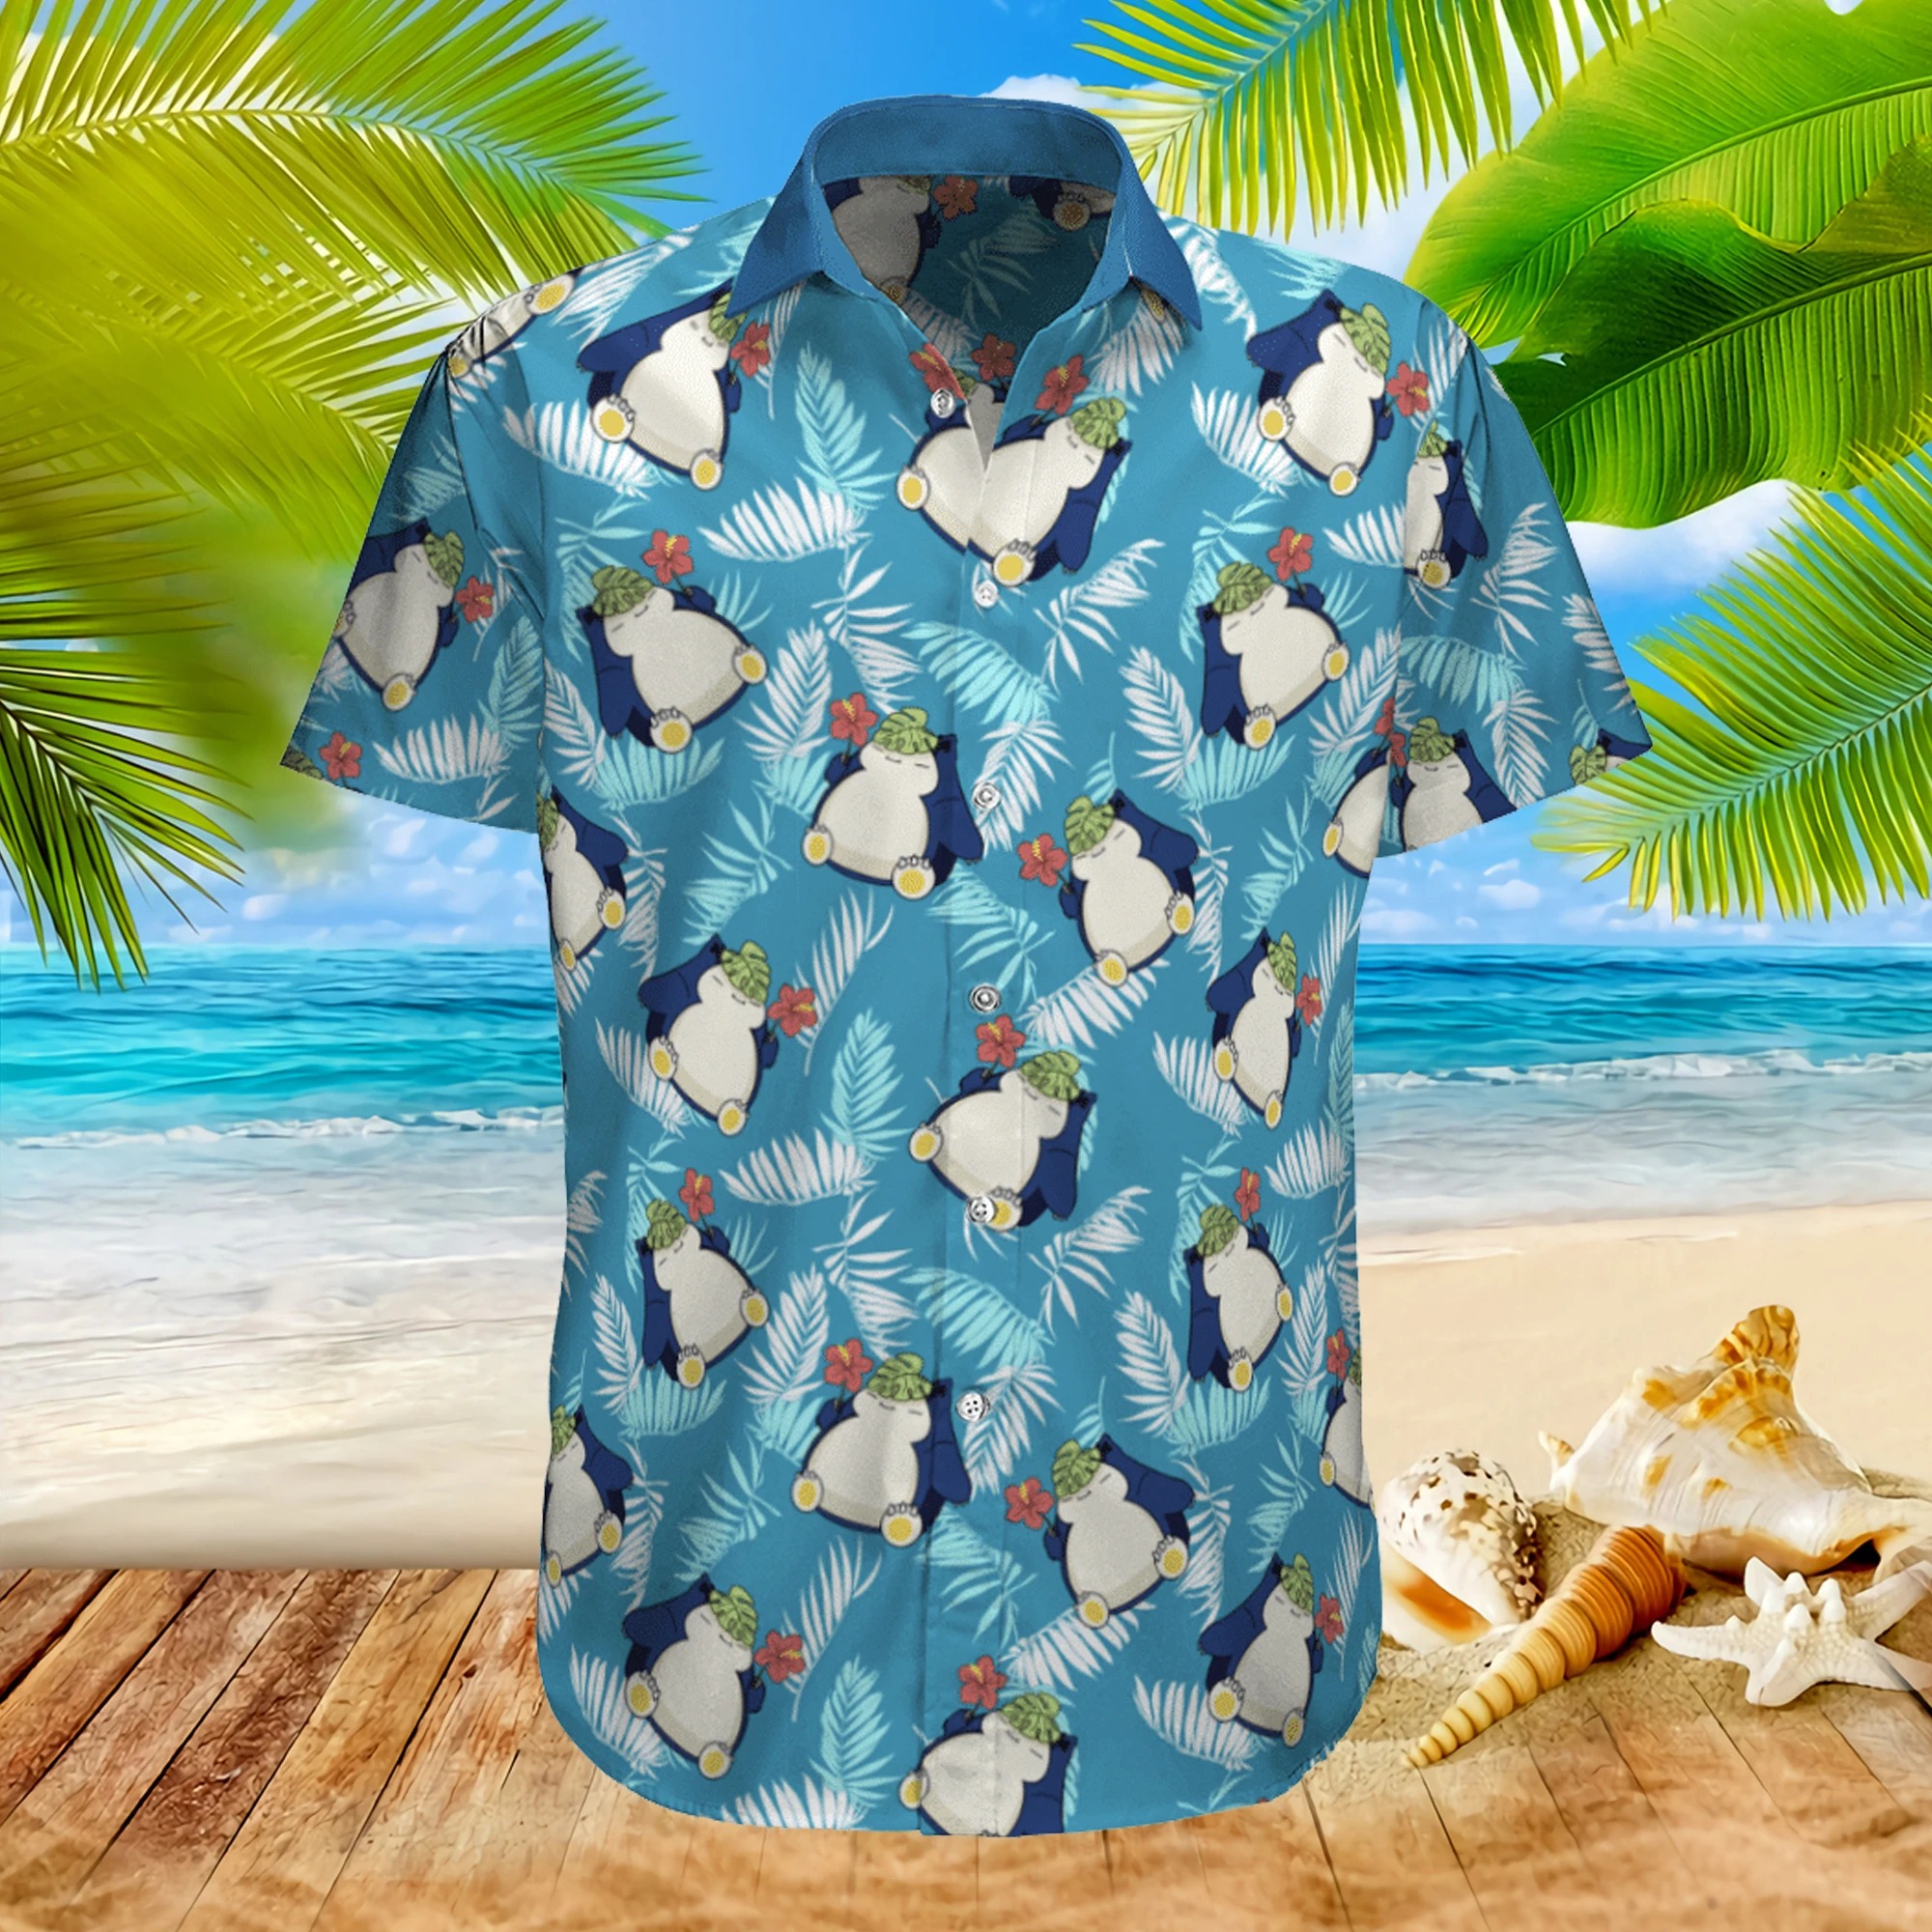 [HOT TREND] Pokemon Snorlax tropical beach hawaiian shirt – Hothot 070921